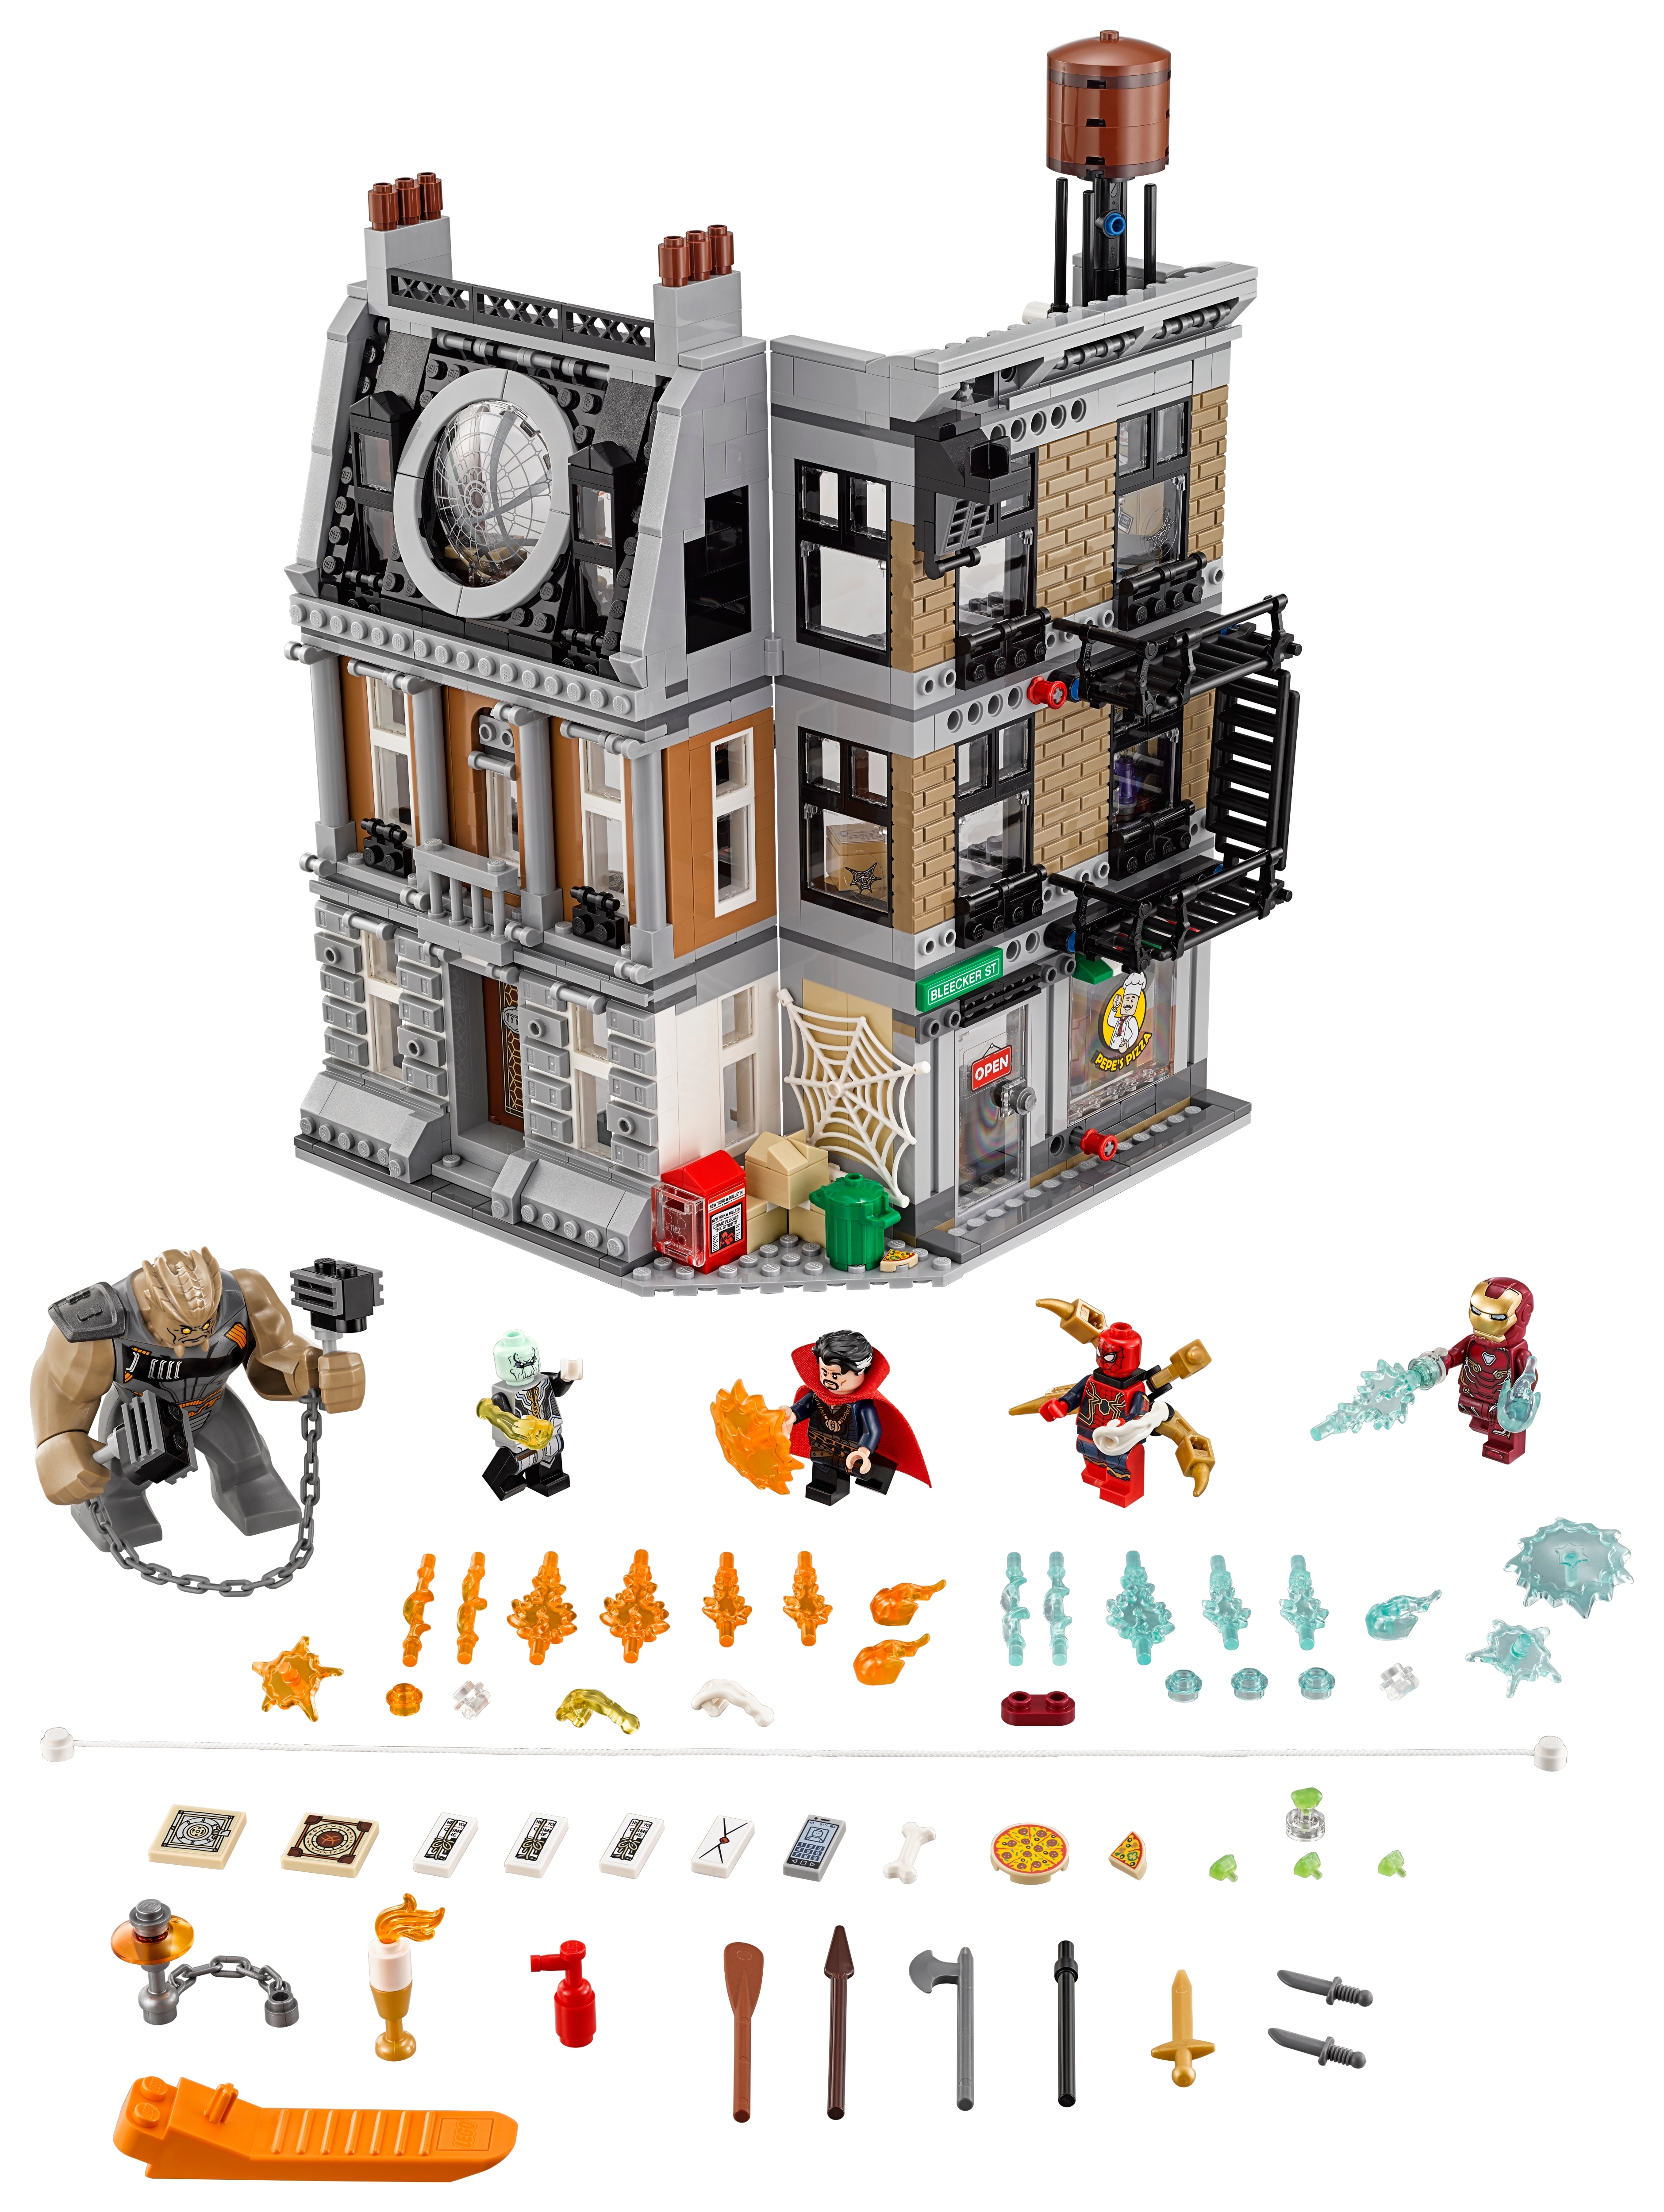 NEW LEGO Super Heroes Infinity War Minifigure Iron Man set 76108  Complete. 